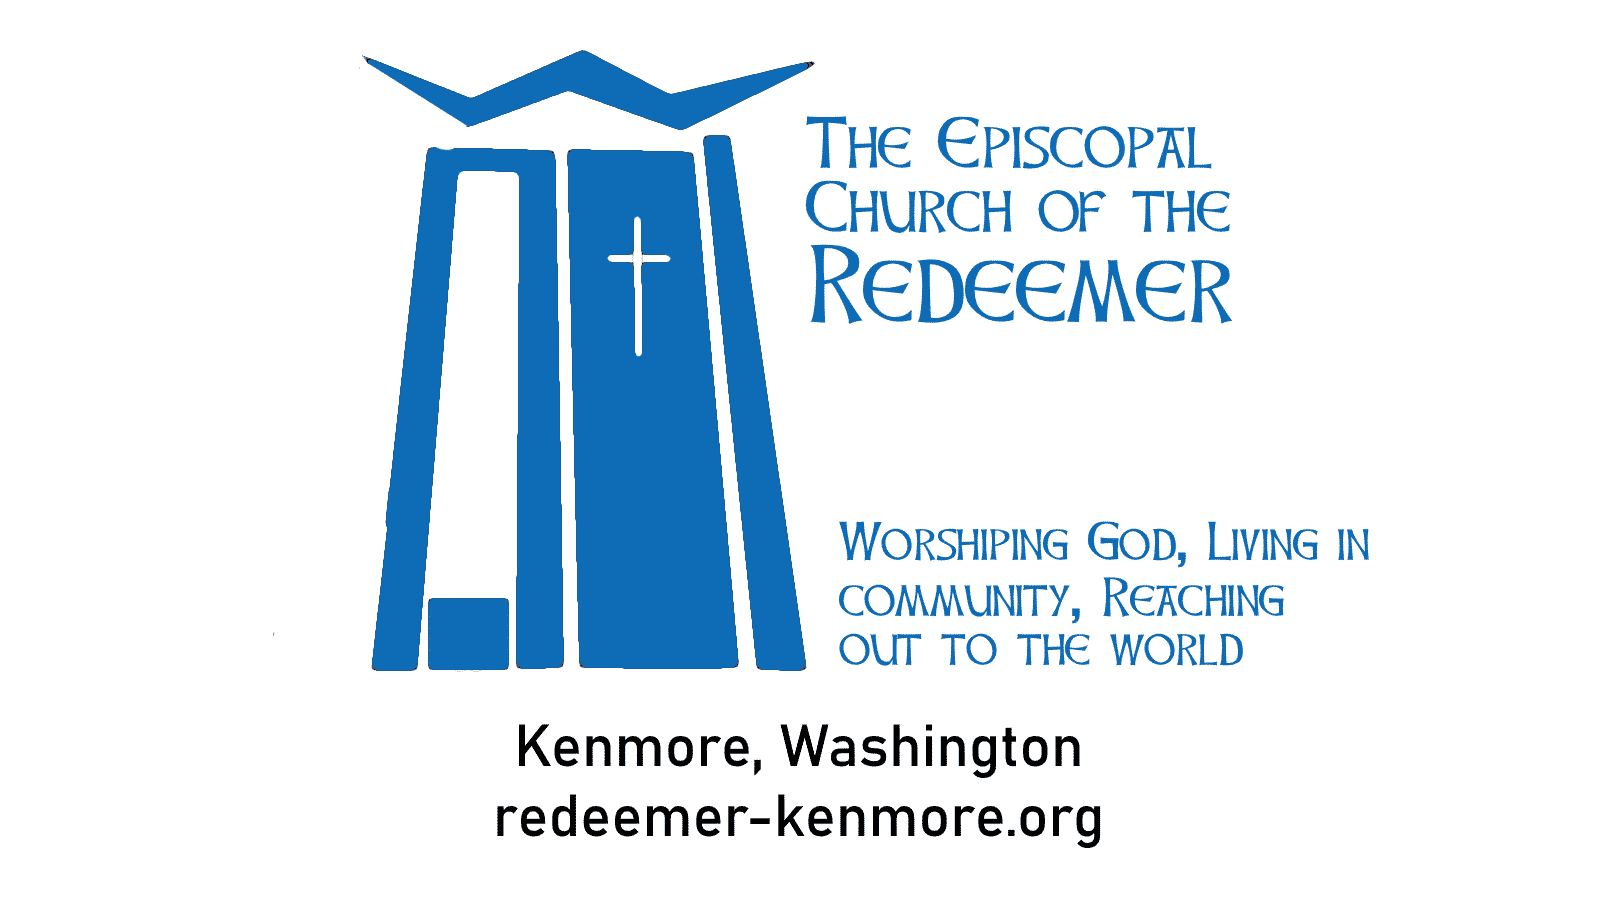 Church of the Redeemer, Kenmore, Washington